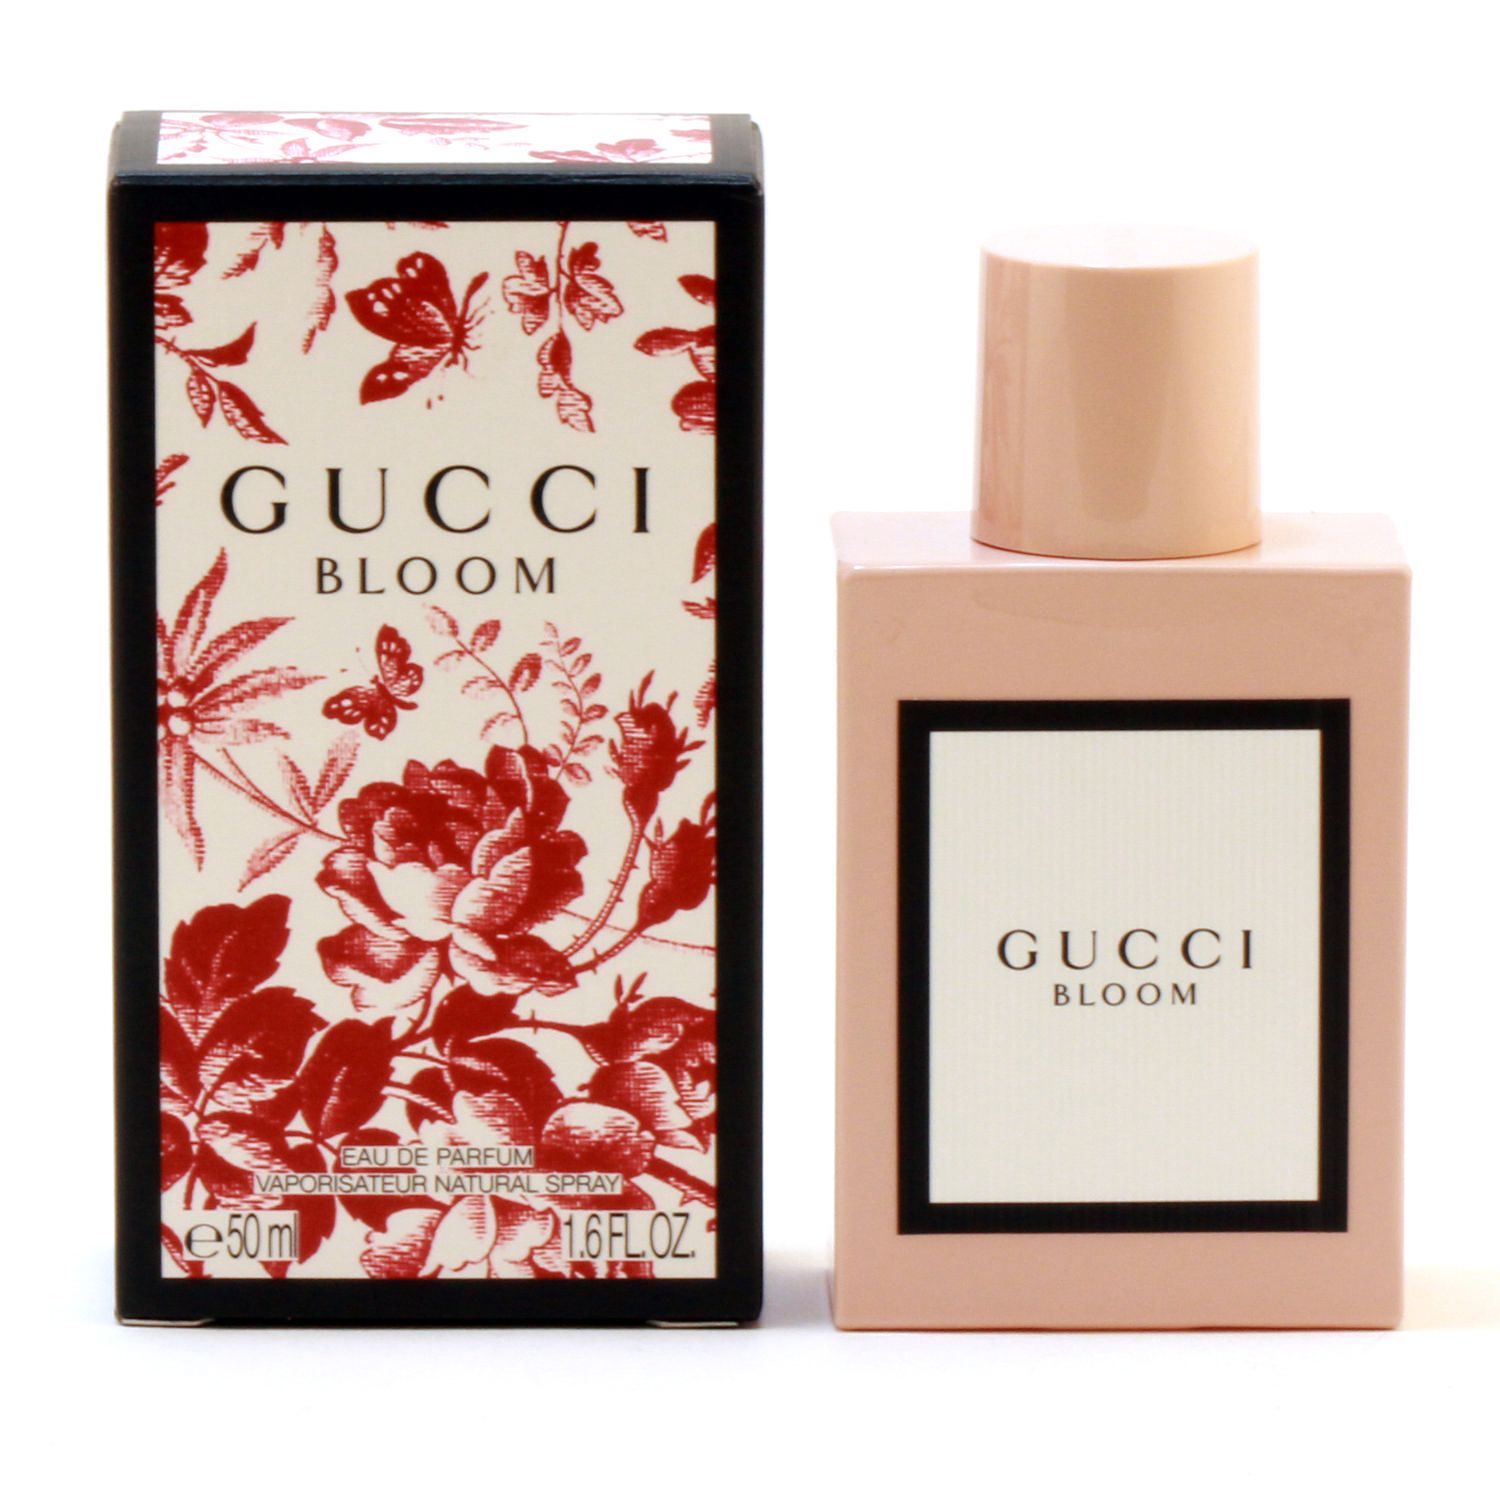 gucci bloom perfume 100ml